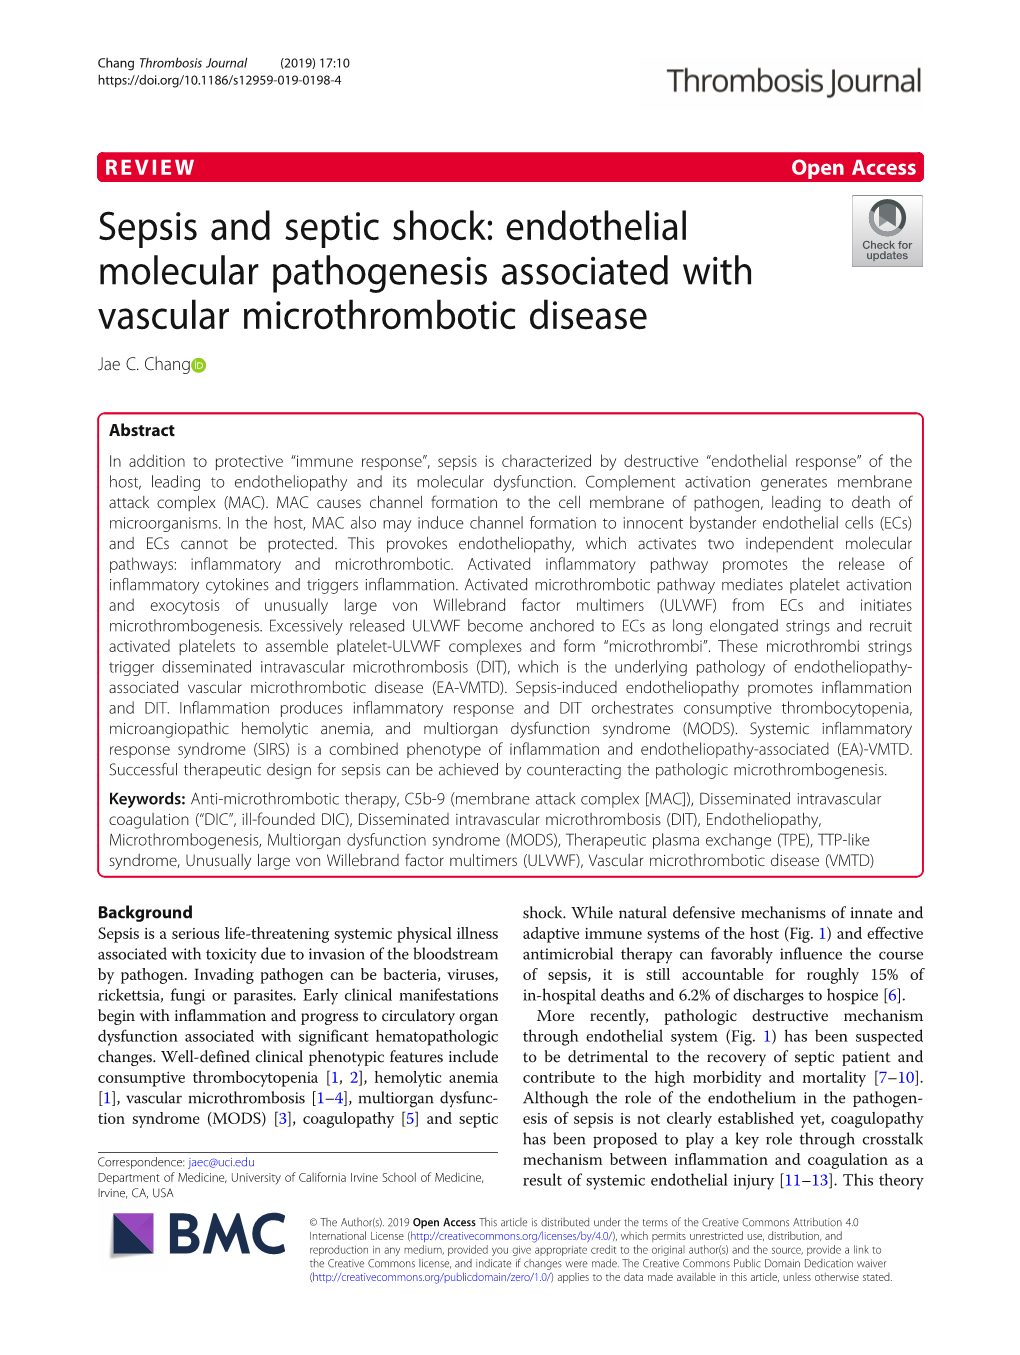 Sepsis And Septic Shock Endothelial Molecular Pathogenesis Associated